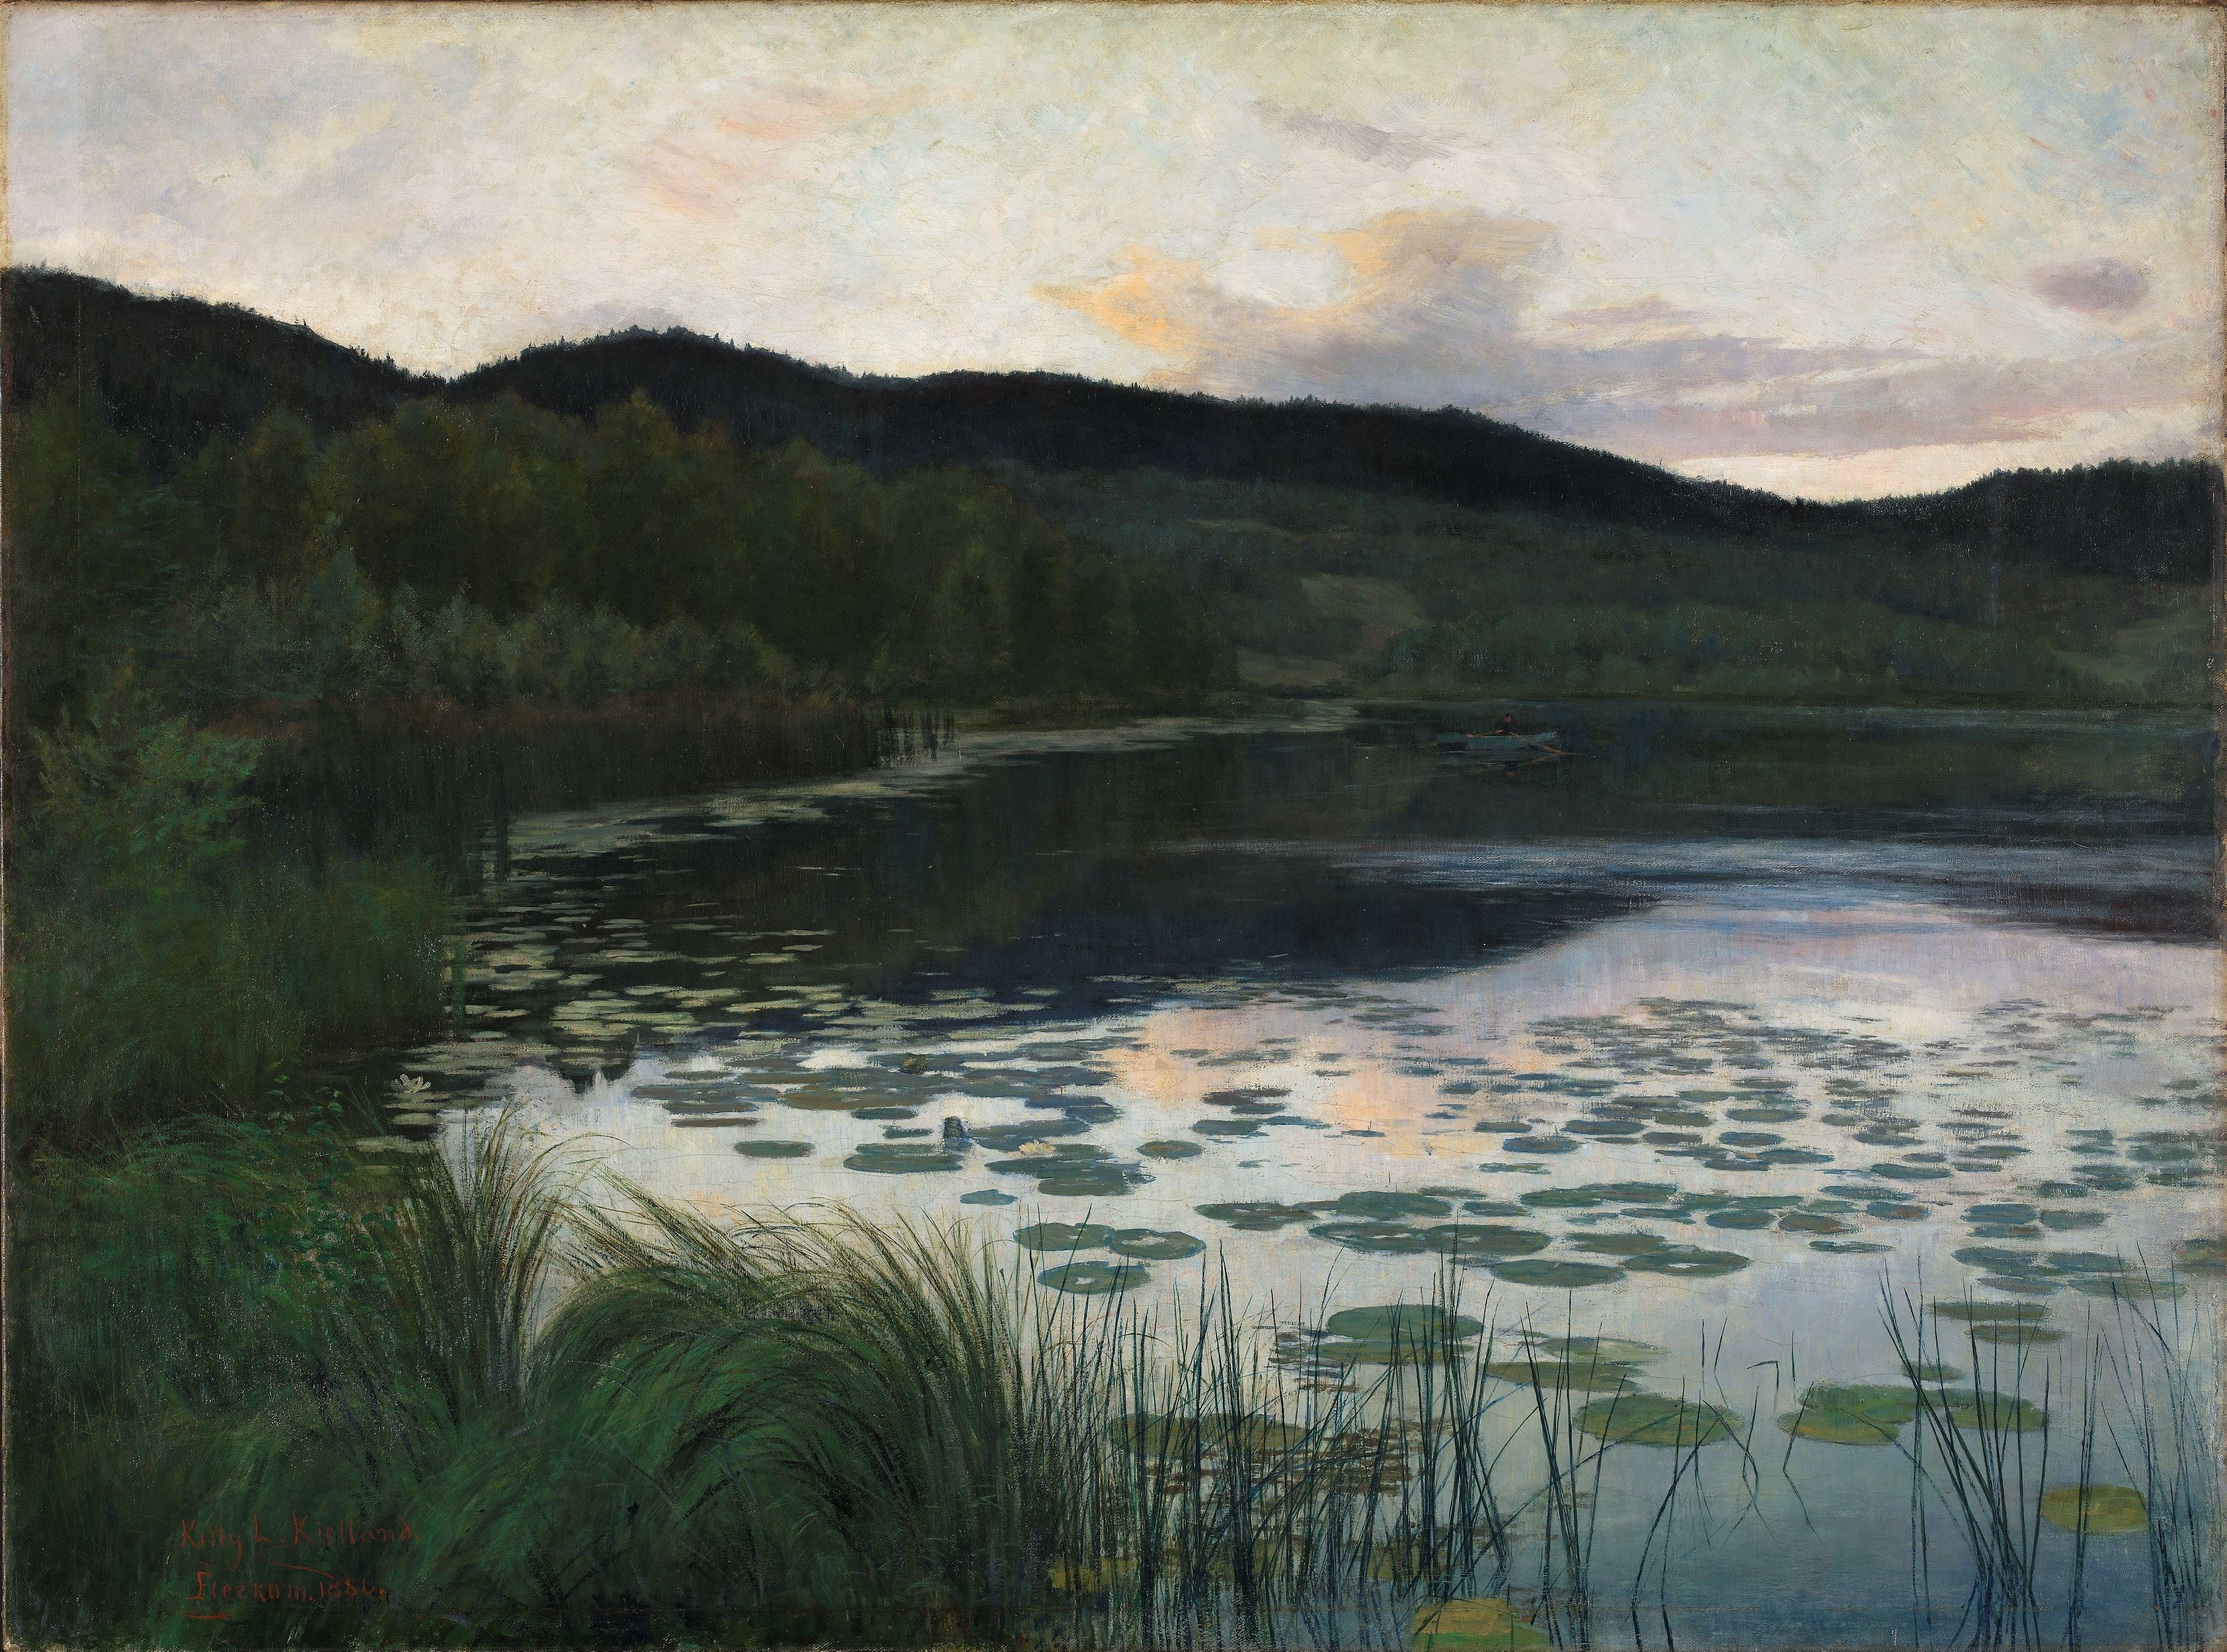 Letnia Noc by Kitty Kielland - 1886 - 135.5 x 100.5 cm 